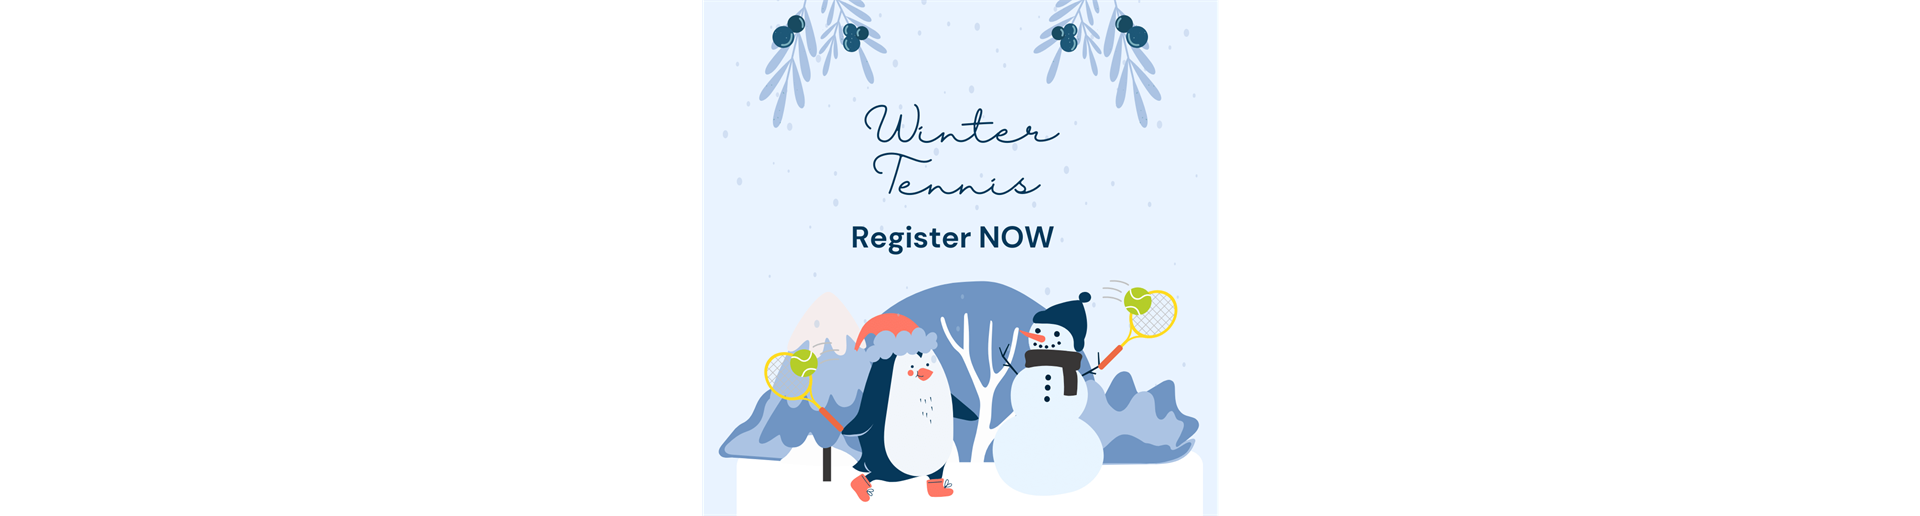 Winter Tennis Registration